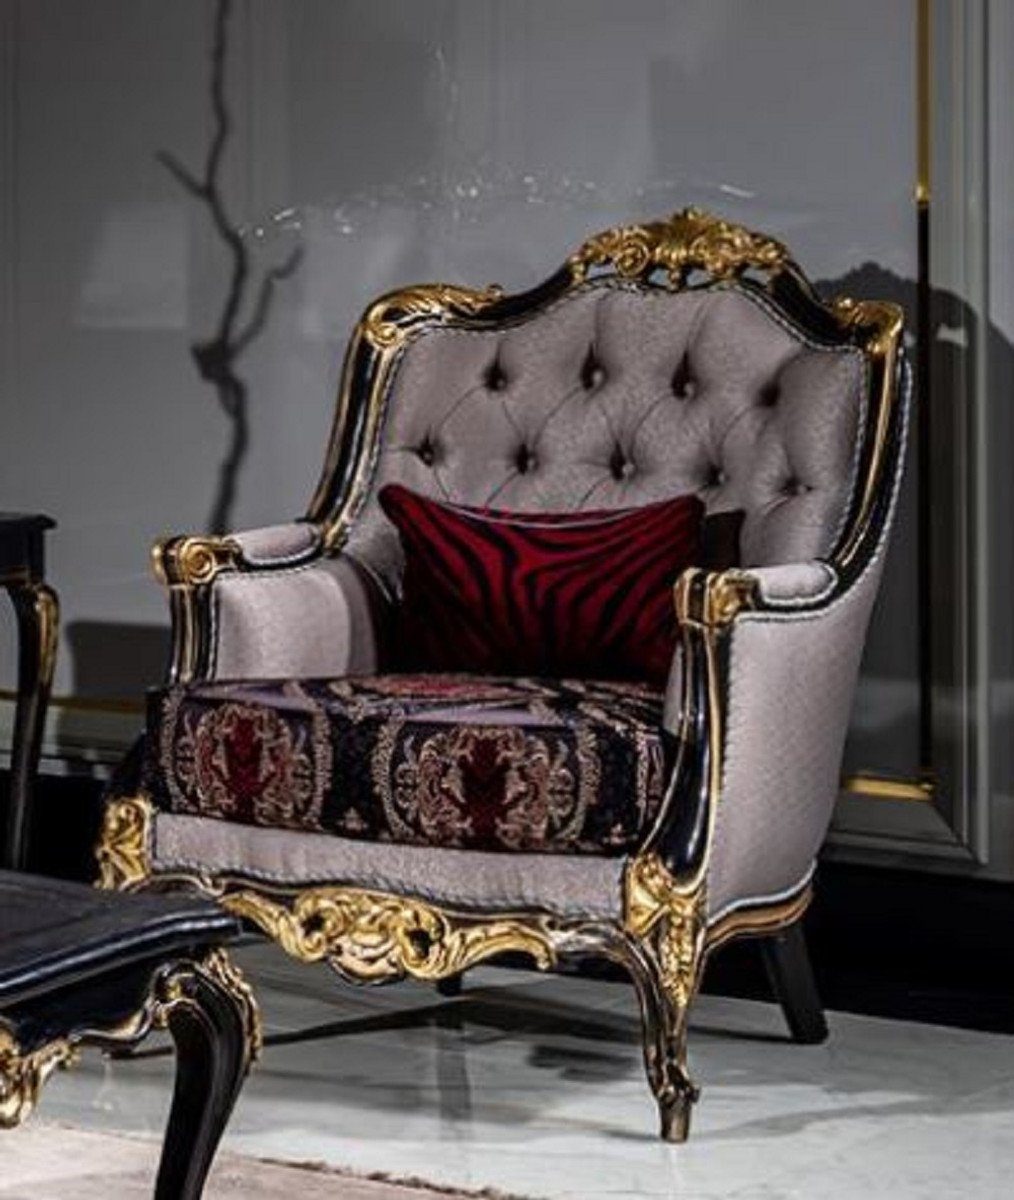 Casa Padrino Sessel Luxus Barock Wohnzimmer Sessel Silber / Bordeauxrot / Schwarz / Gold - Handgefertigter Barockstil Sessel mit elegantem Muster - Barock Wohnzimmer Möbel